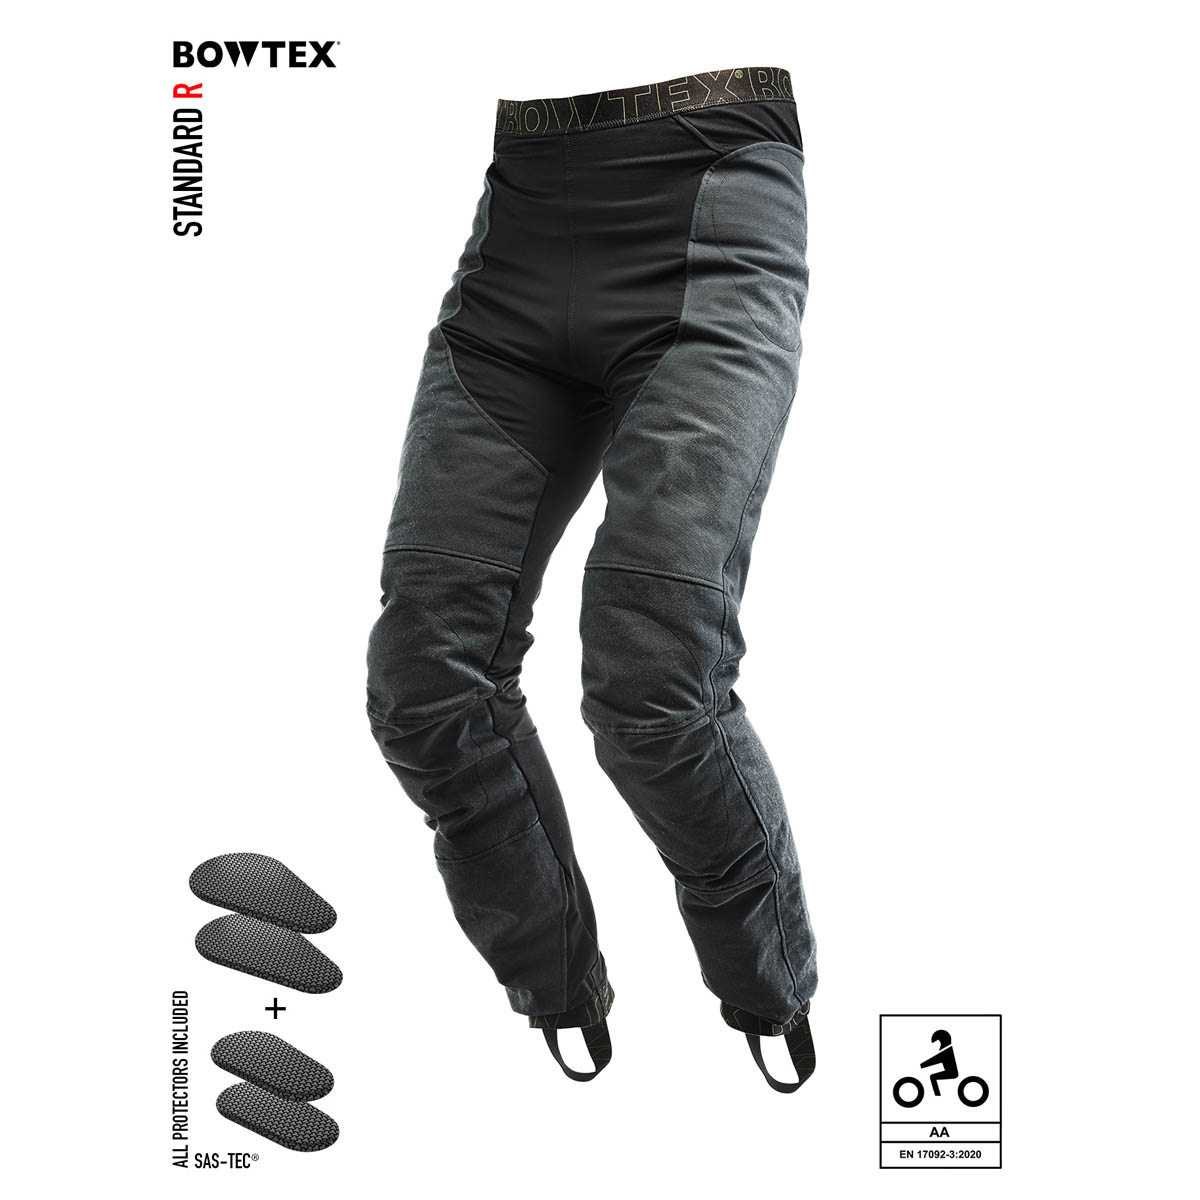 Bowtex standard R pantalon legging moto protection ce